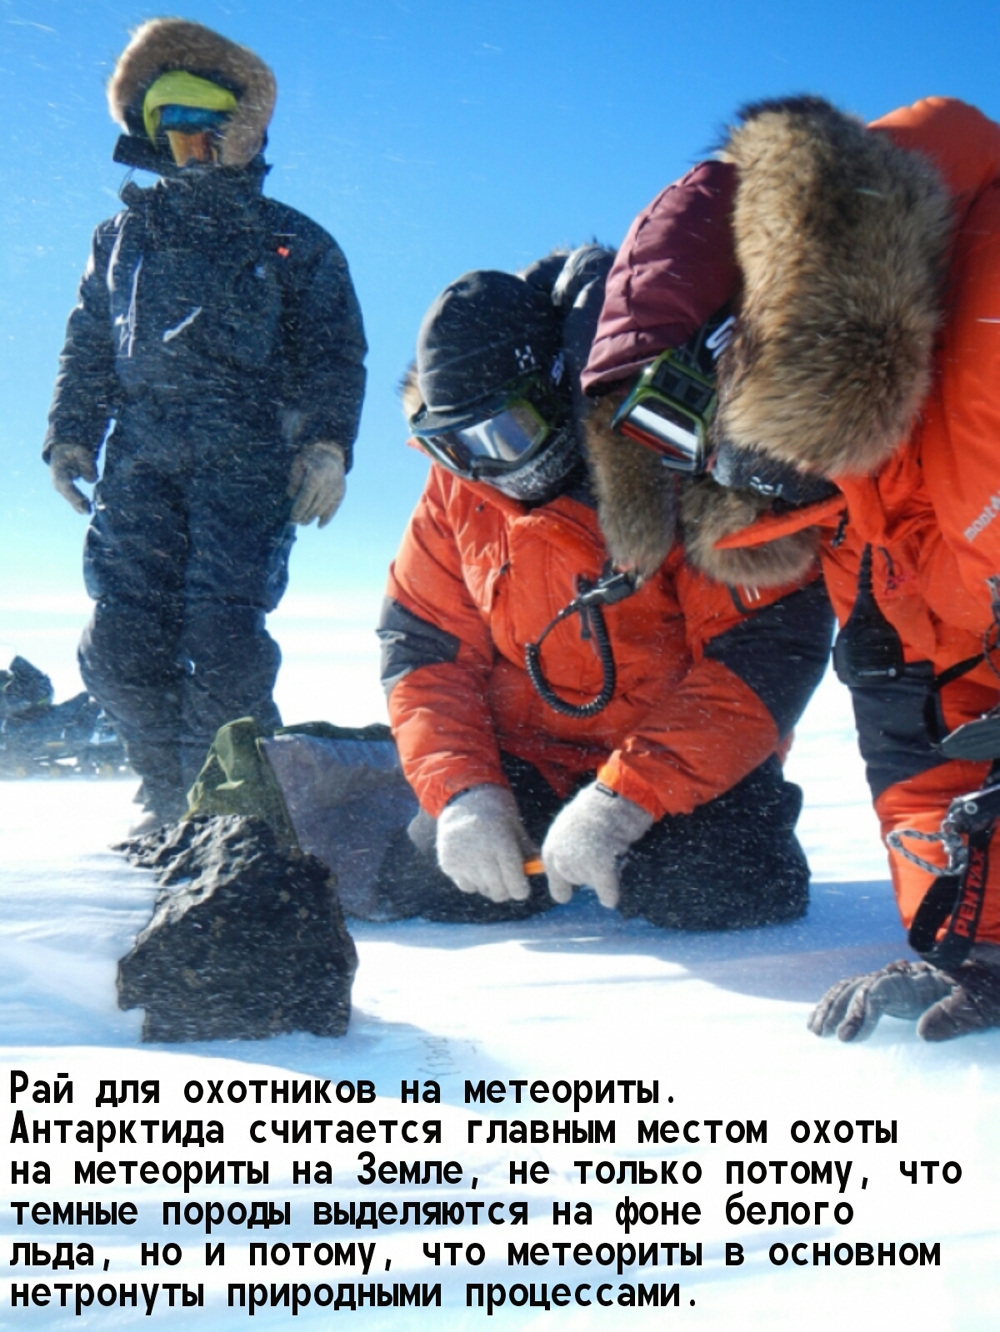 40 фактов об Антарктиде (фото)